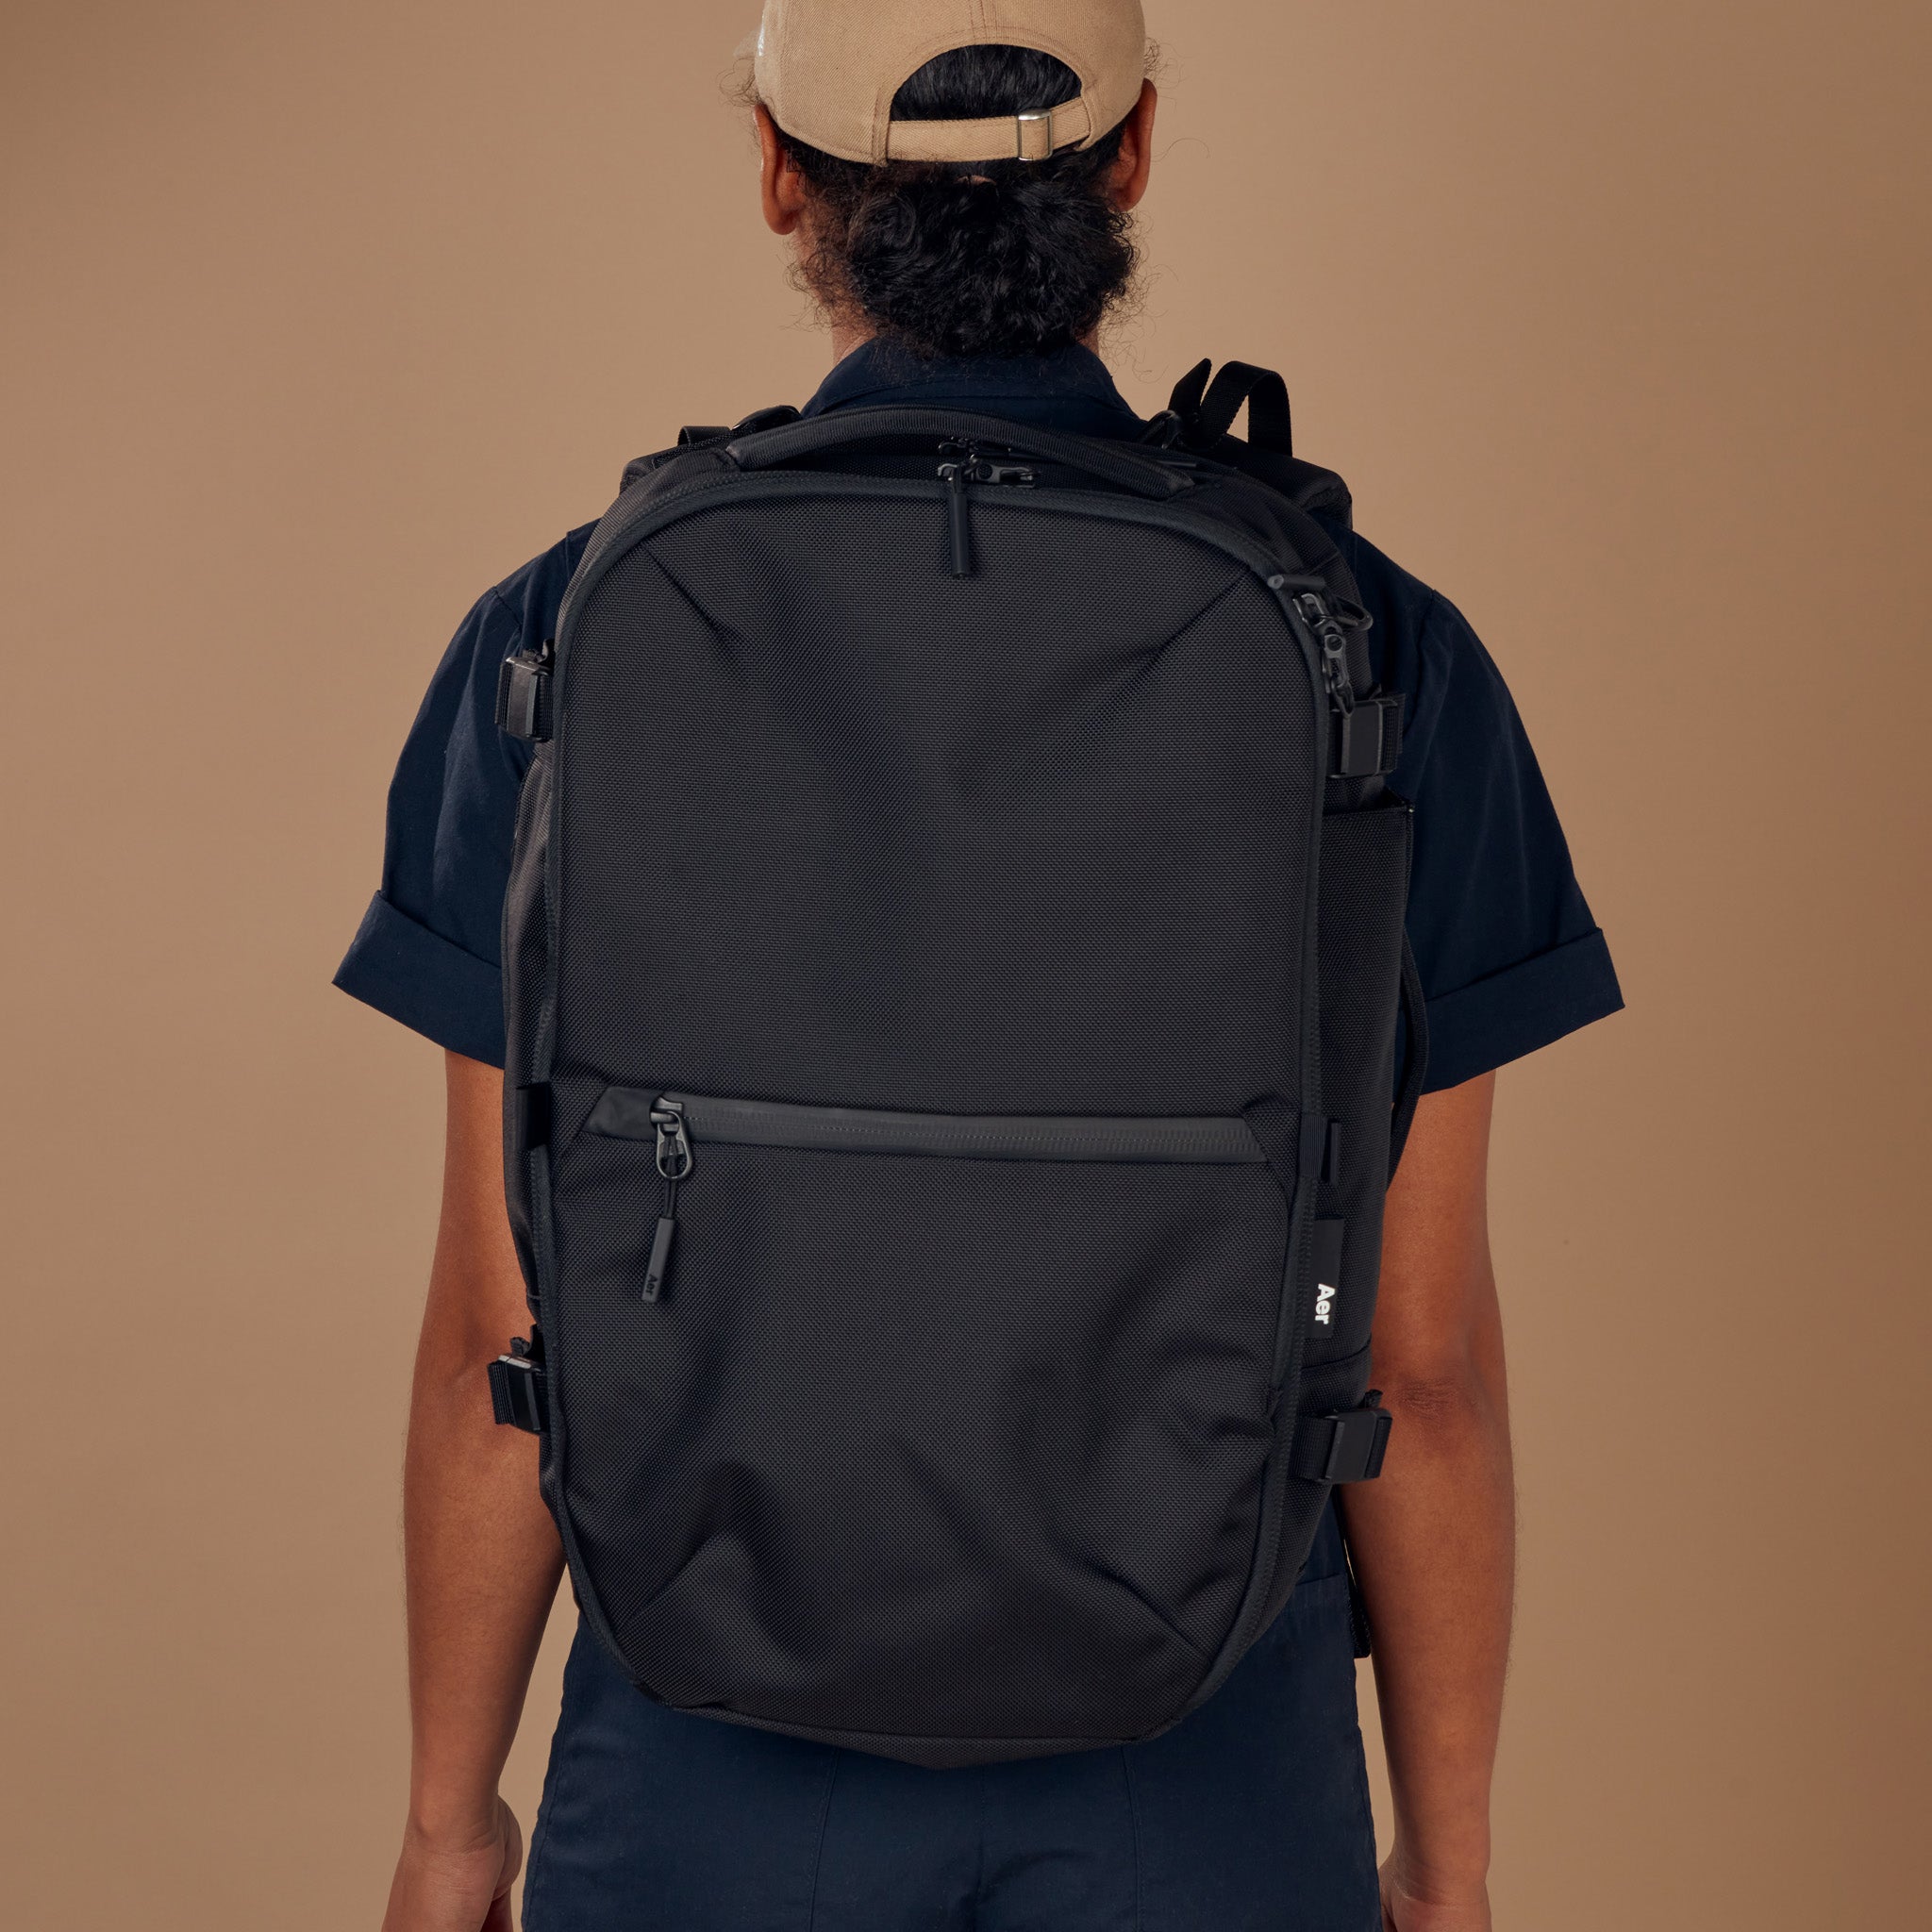 Aer Travel Pack 3 Bag – MoMA Design Store